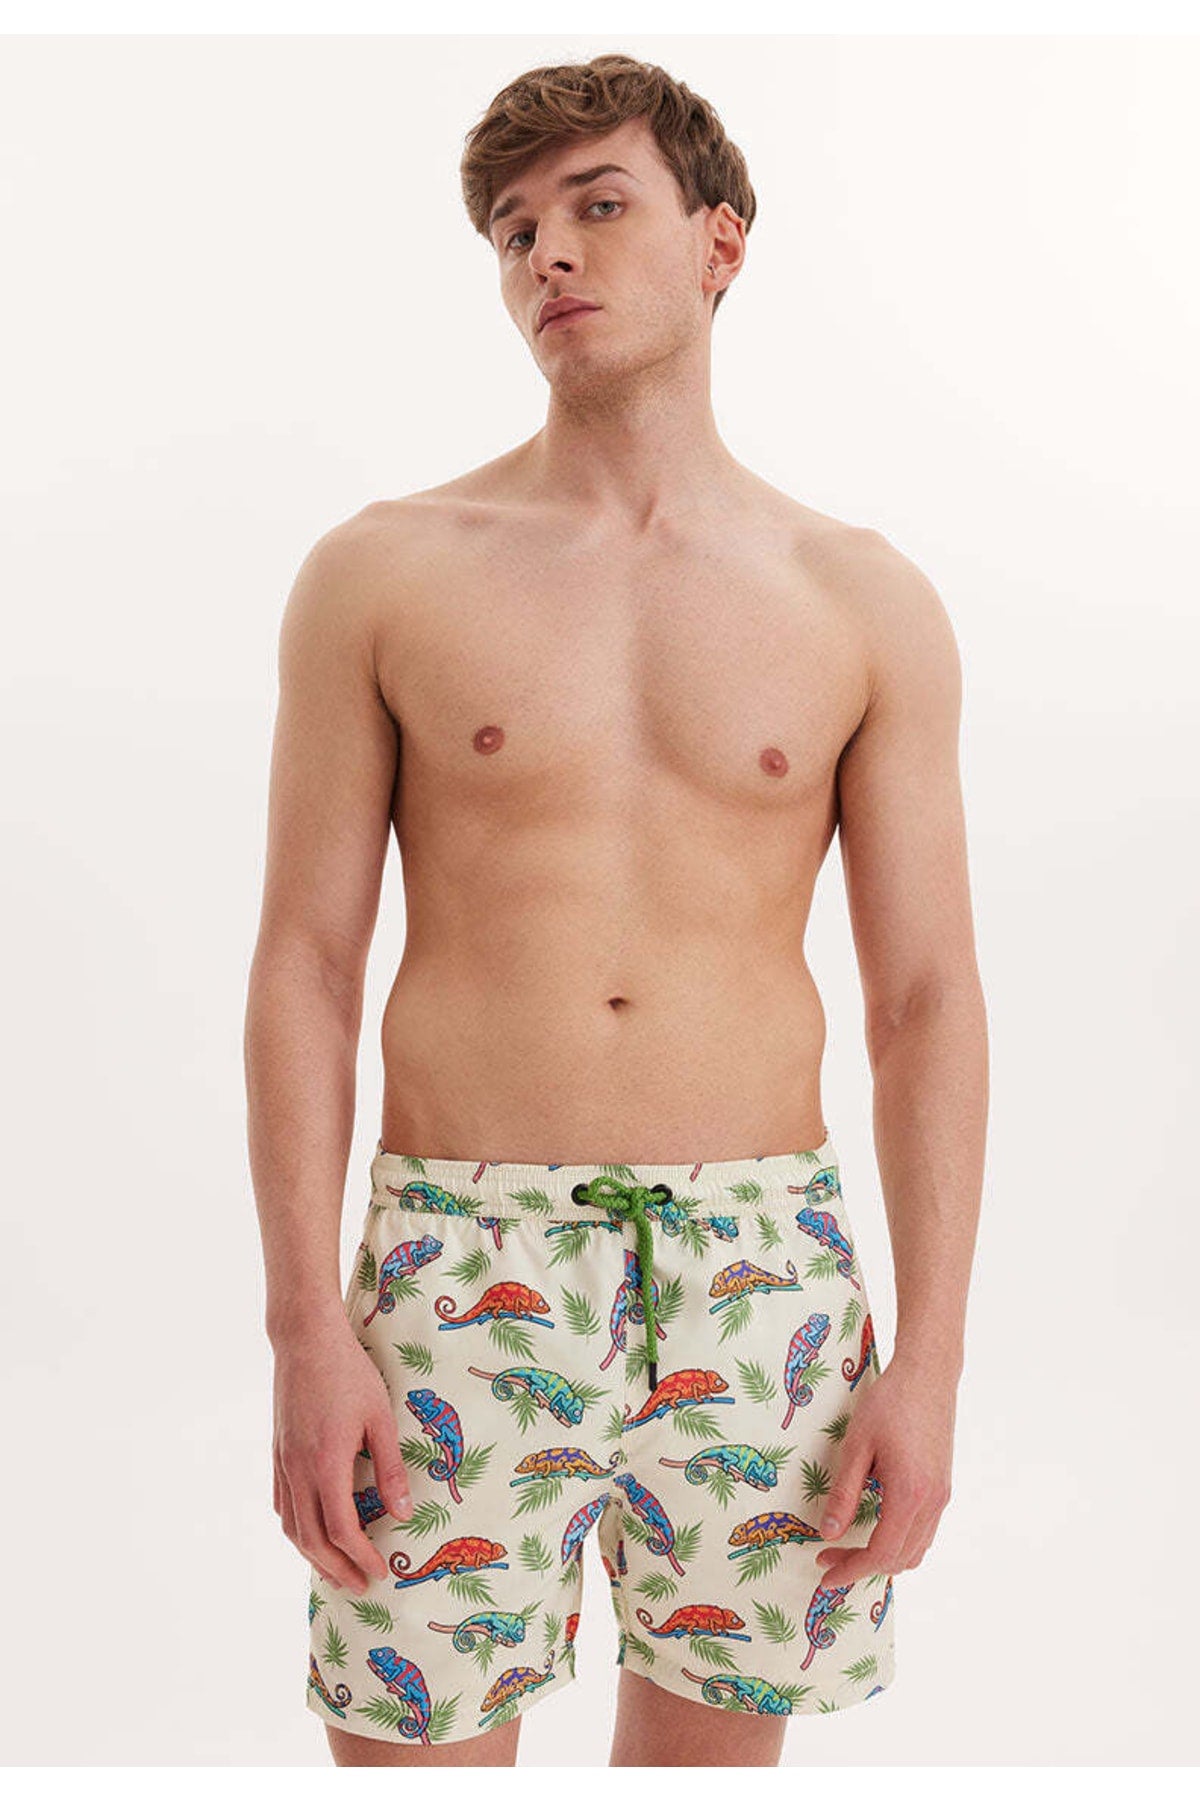 Men's Beige Printed Sea Shorts Wmpattern Swımshorts